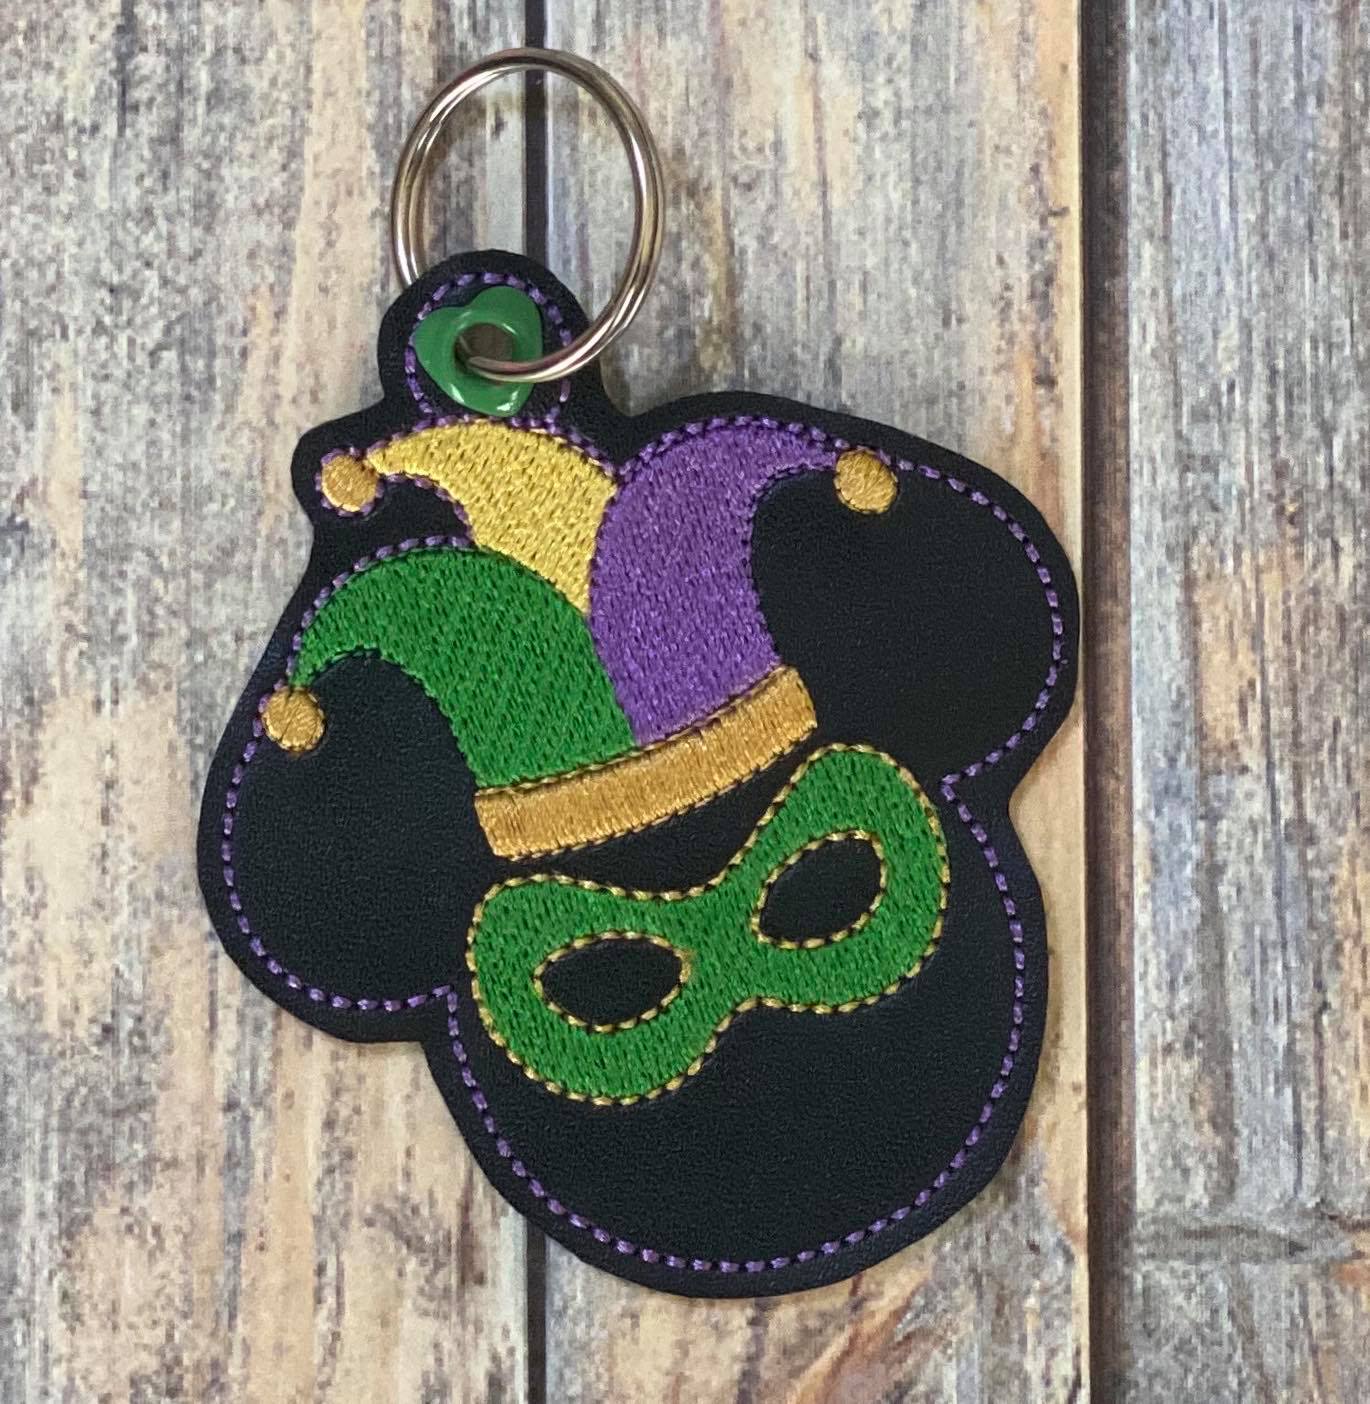 Mardi Gras Mouse Fobs -  DIGITAL Embroidery DESIGN